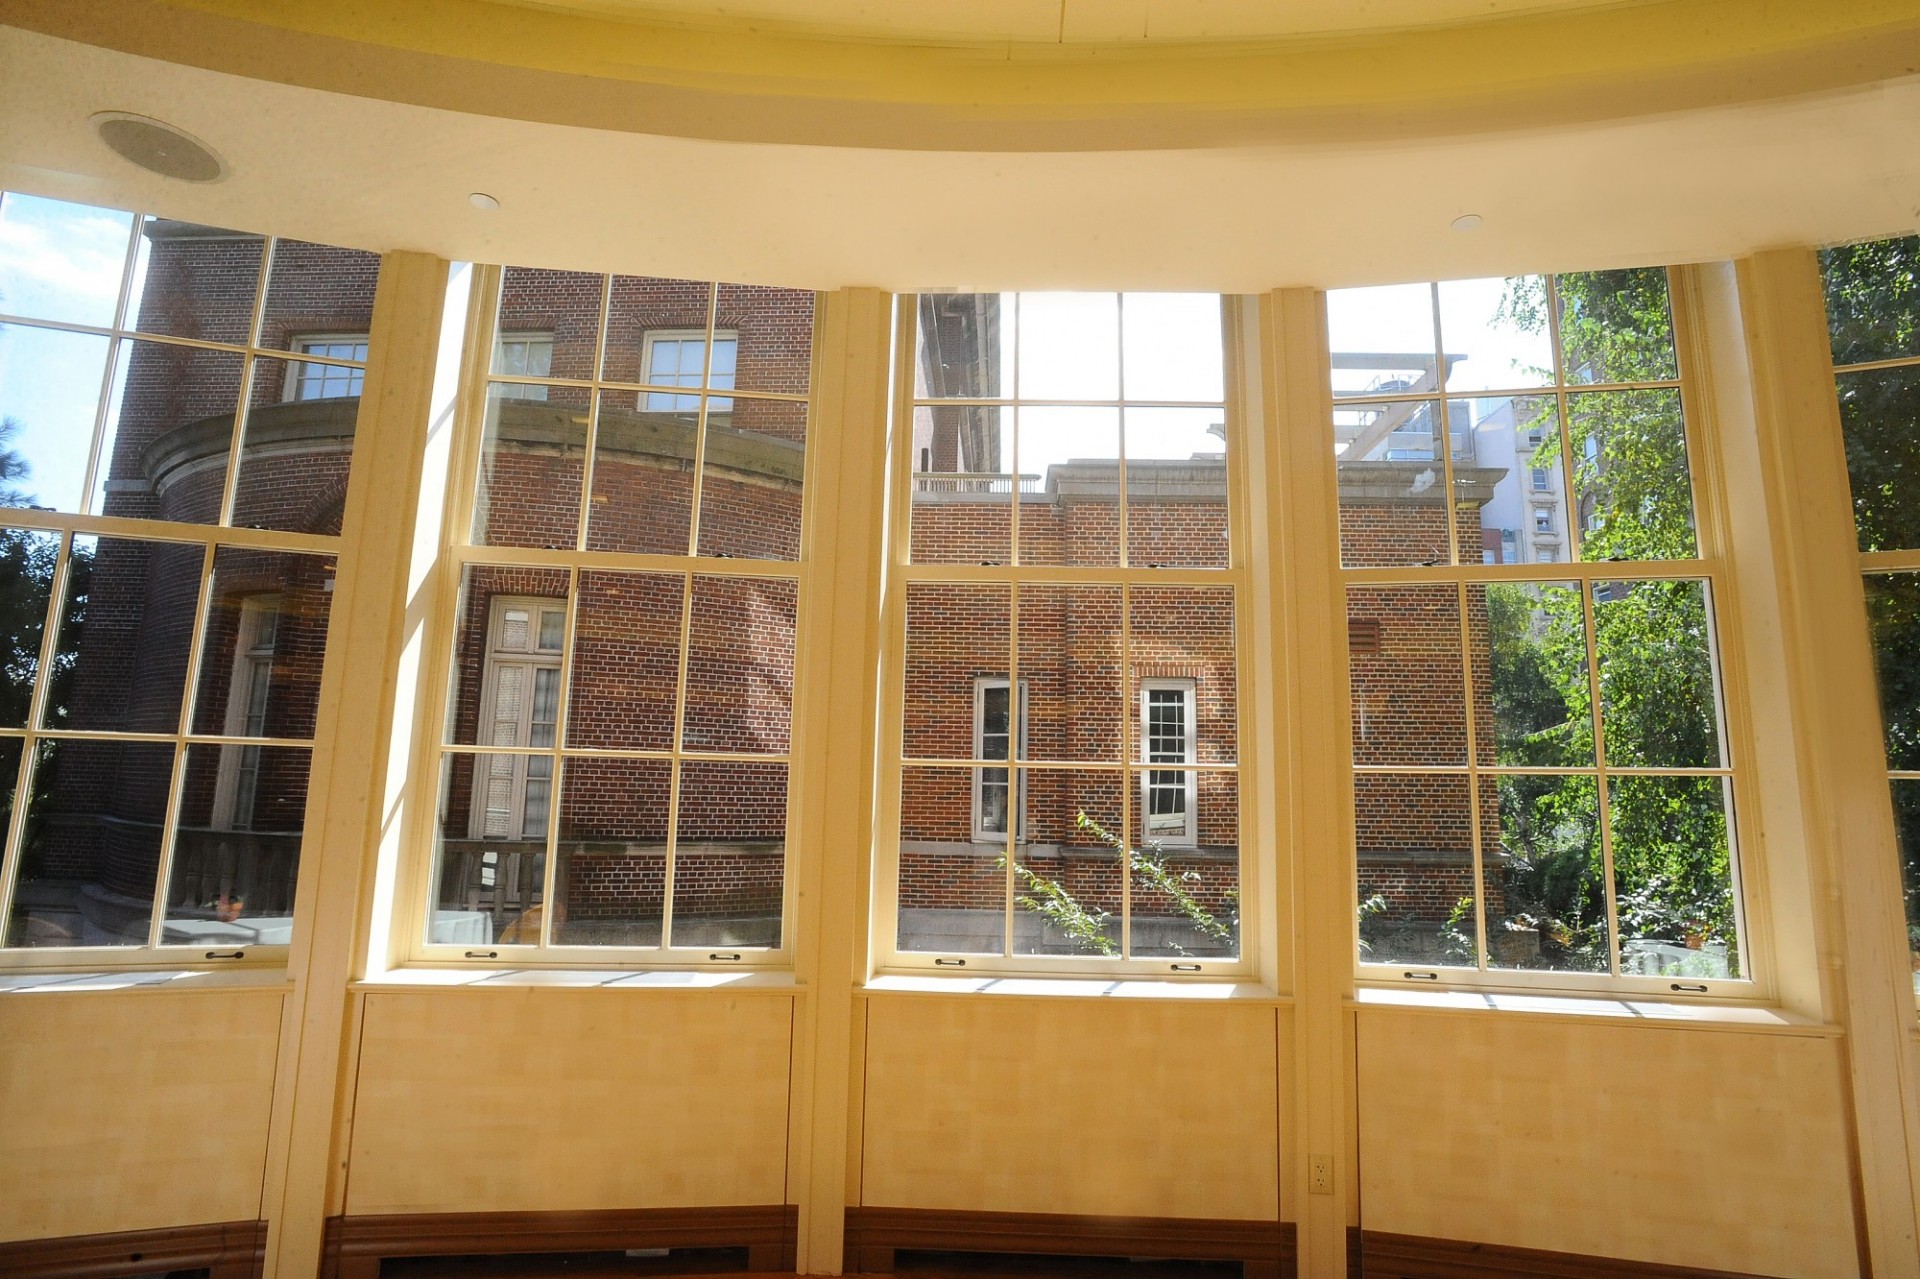 Pane glass windows in Seminar Room 1